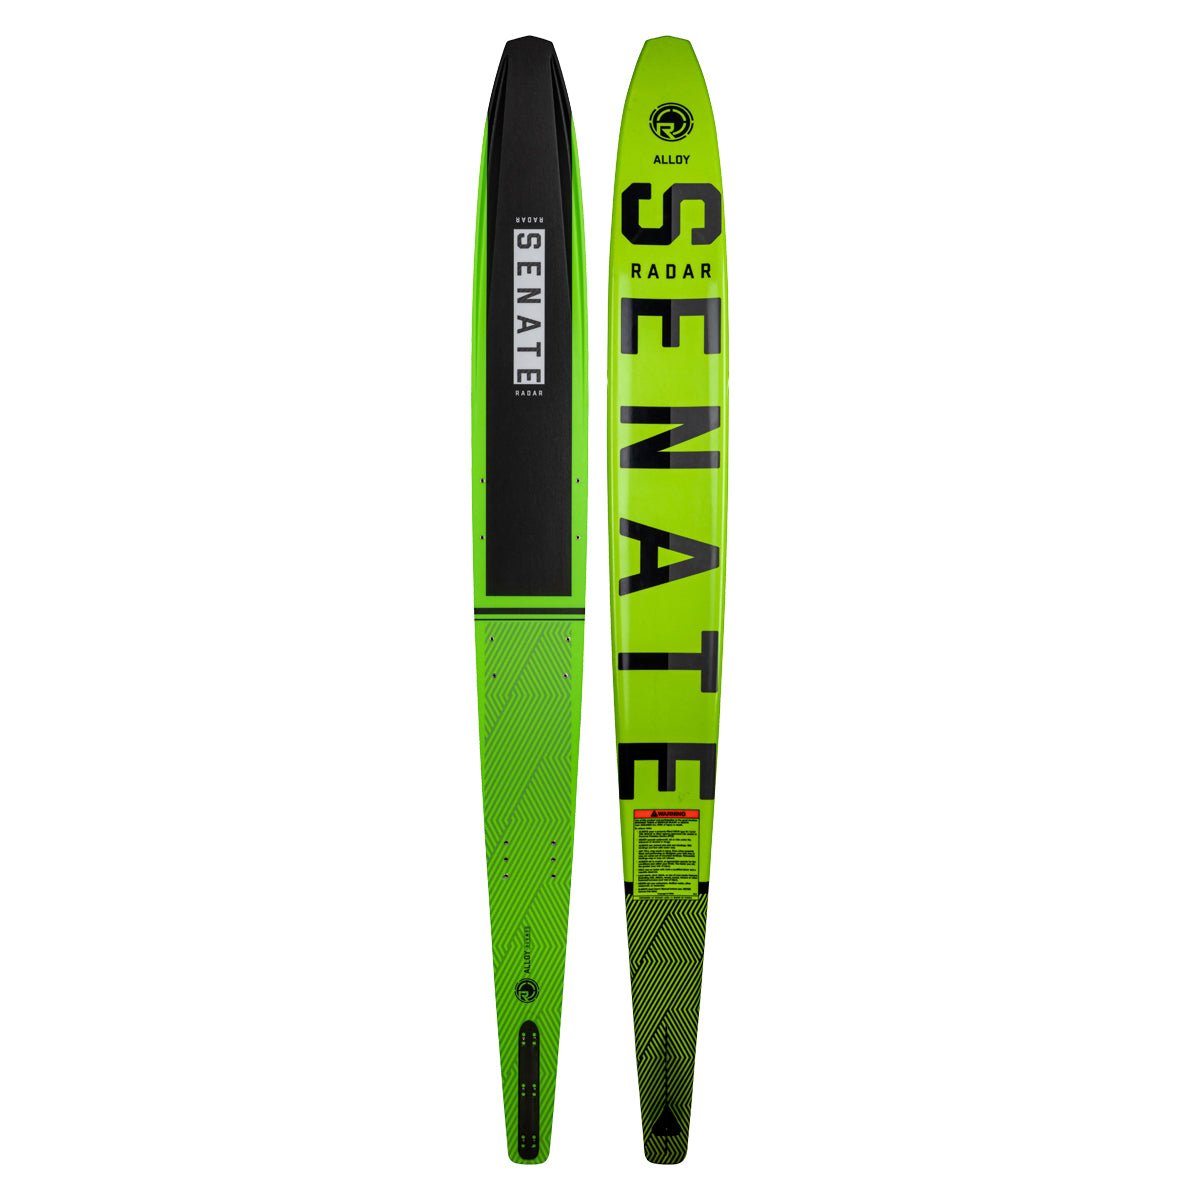 Radar Alloy Senate Water Ski 2022 - BoardCo